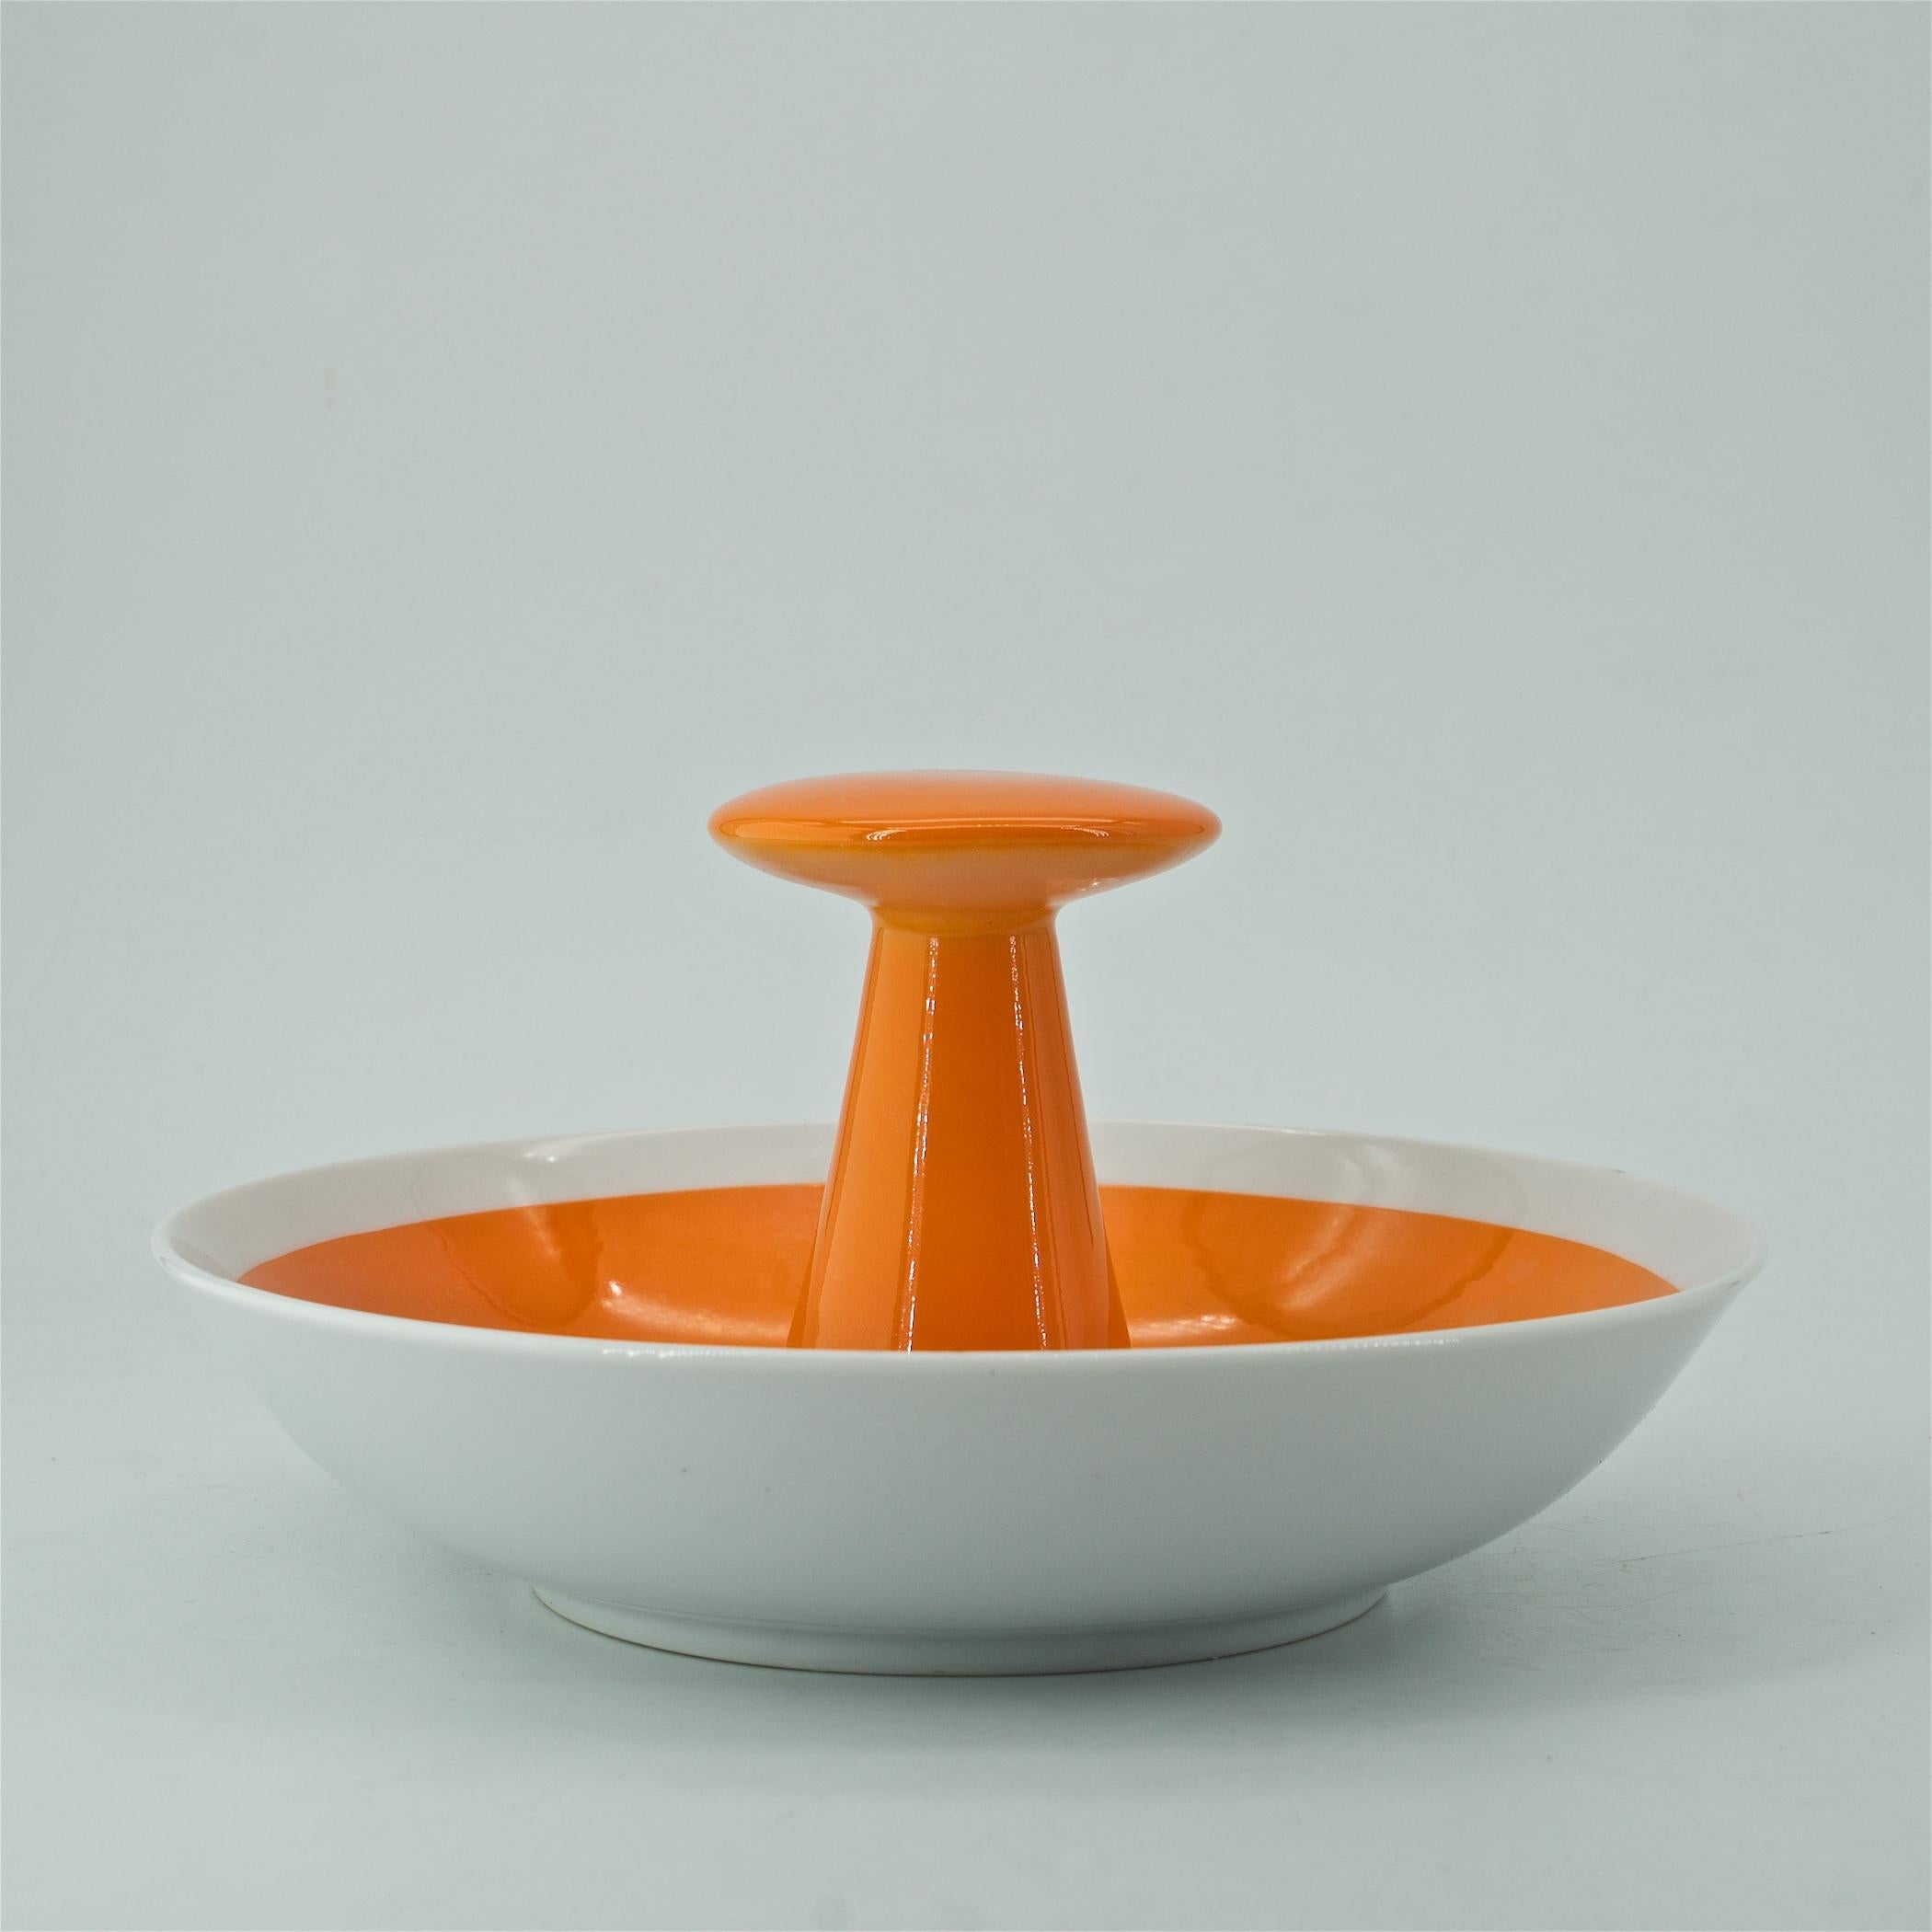 Japanese 1960s Bright La Gardo Tackett Orange and White Candy Nut Dish Bowl Retro Pop Art